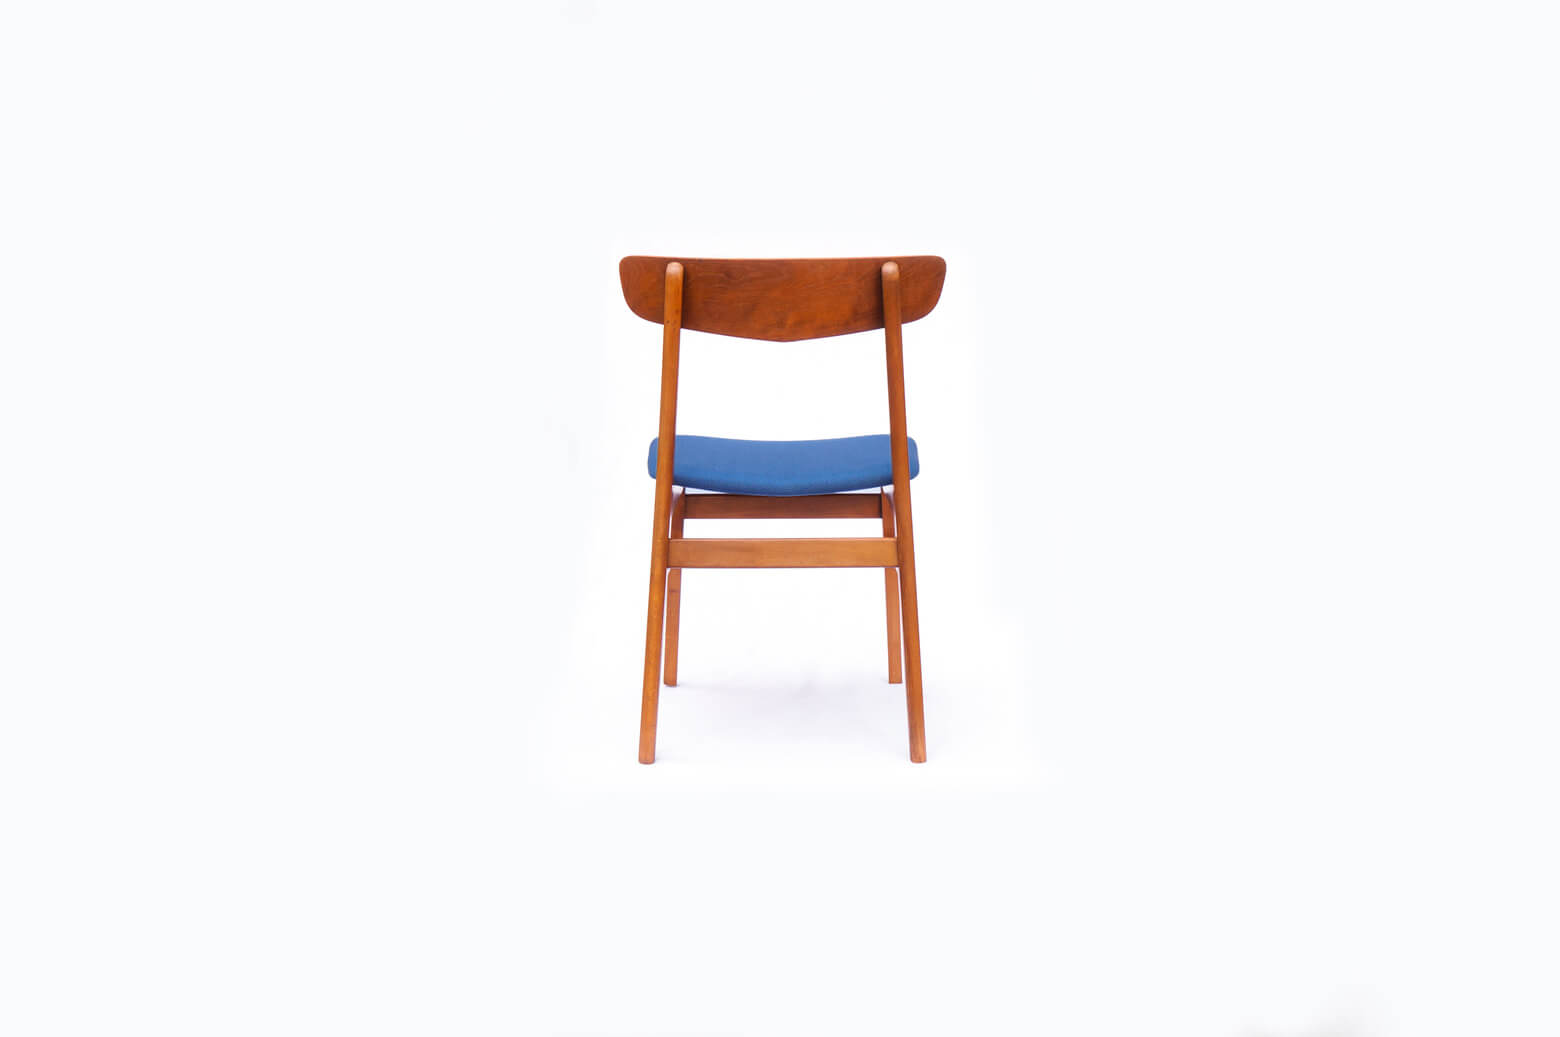 Danish Farstrup Møbelfabrik Dining chair/デンマーク ヴィンテージ ダイニングチェア ブルー 2